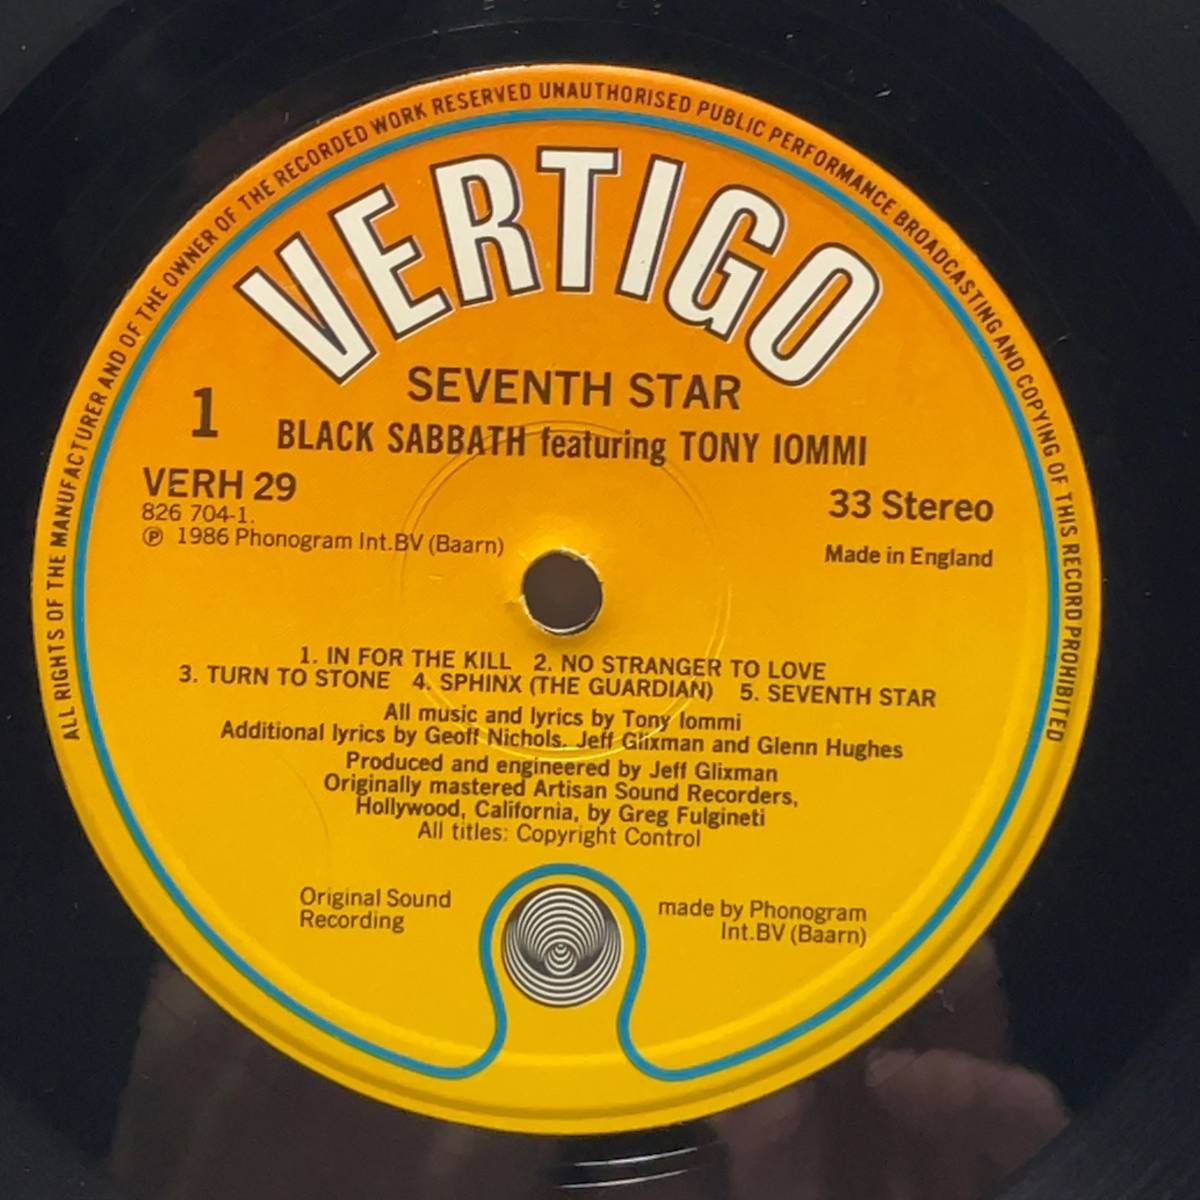 Vinyl レコード Black Sabbath / Tony Iommi Seventh Star VERH 29 UK PRESSING(1986)_画像8